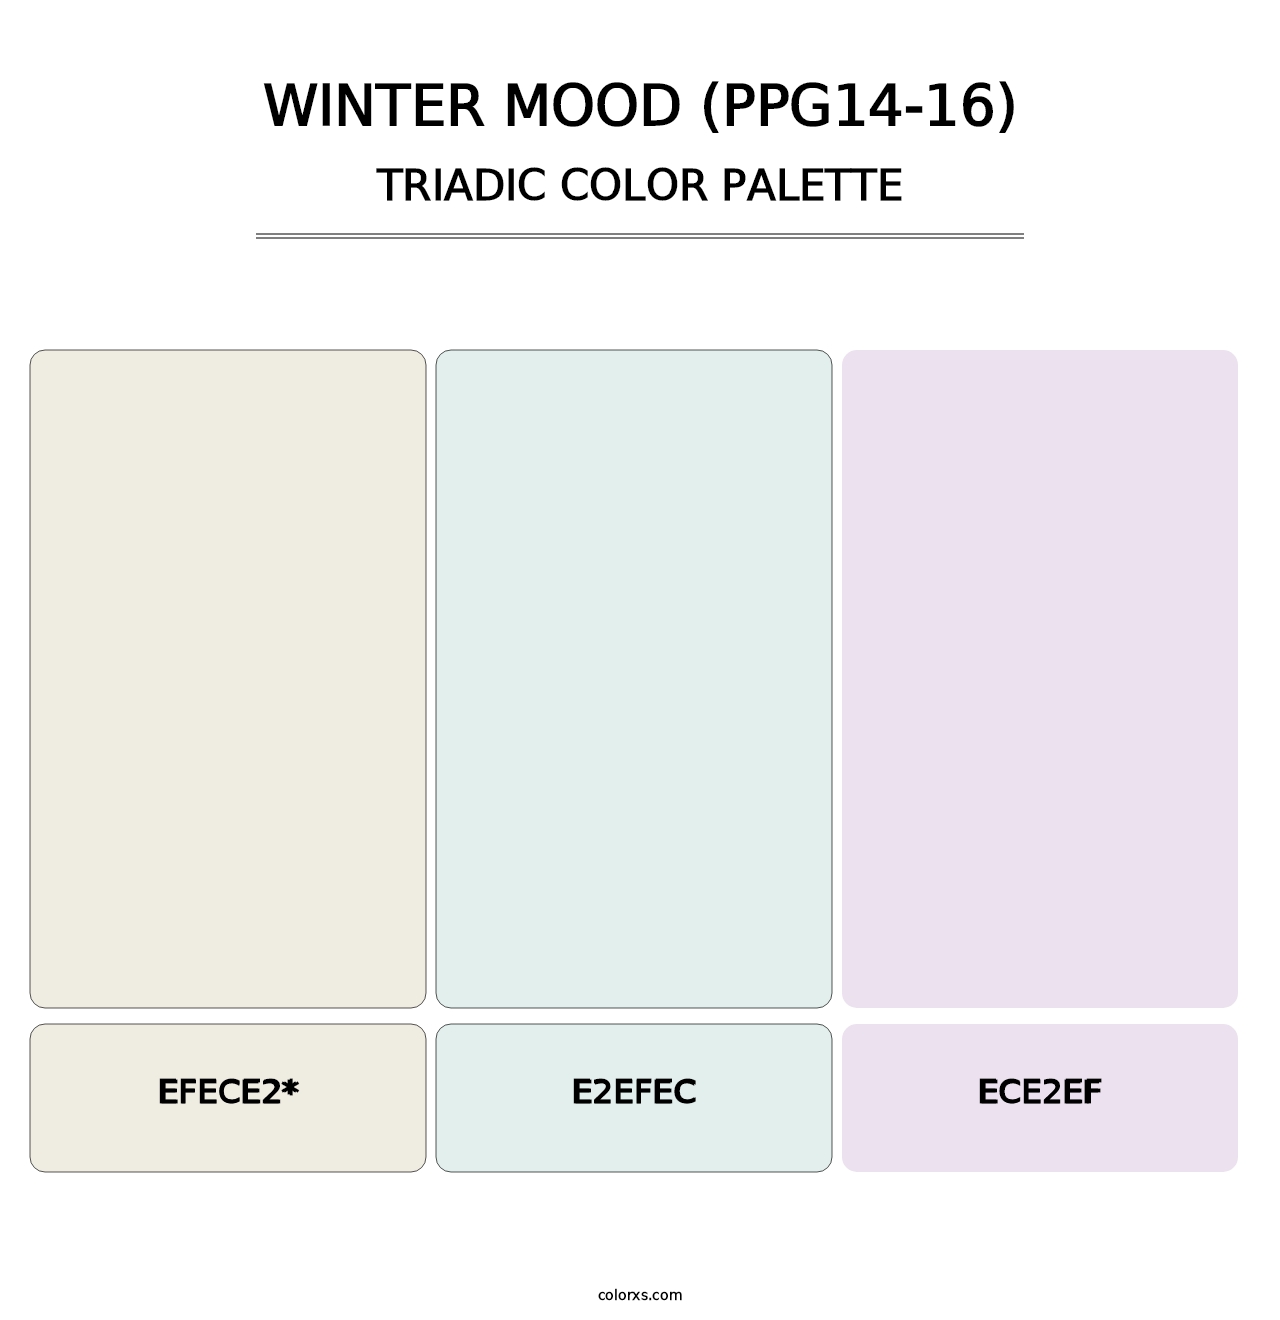 Winter Mood (PPG14-16) - Triadic Color Palette